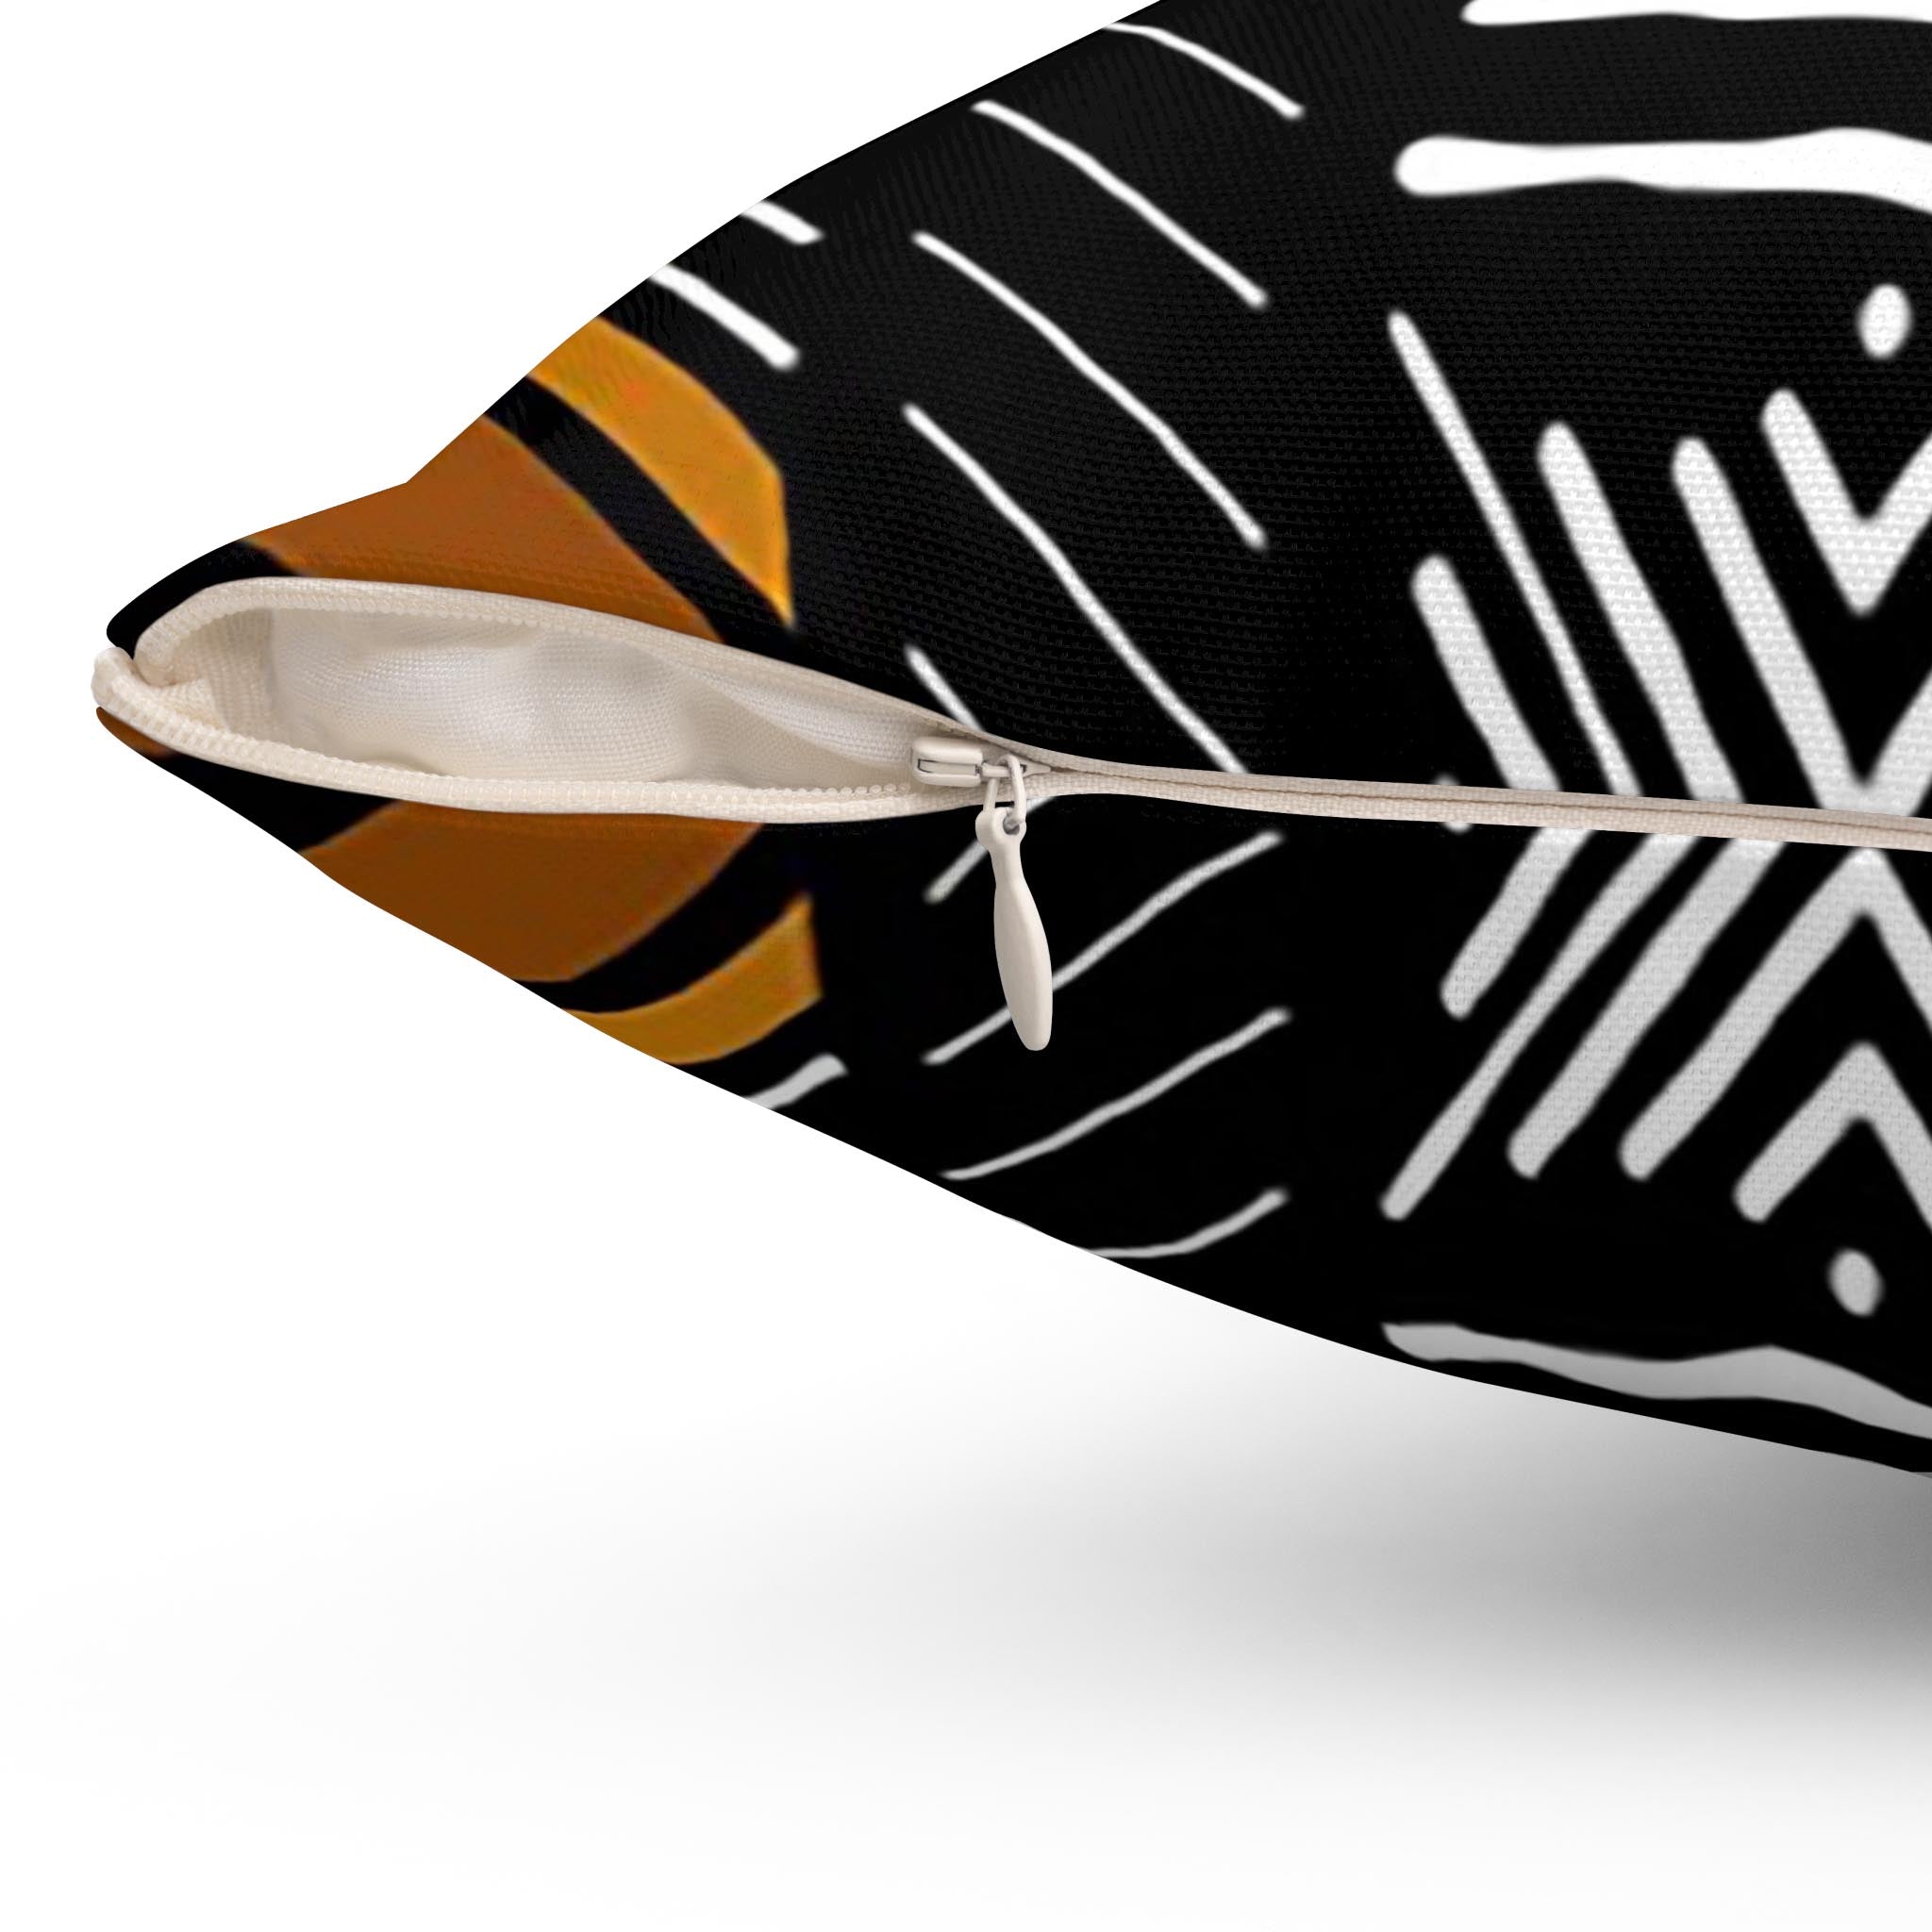 Geometrical Tribal African Cushions: Pillow & Throw Cover Charm